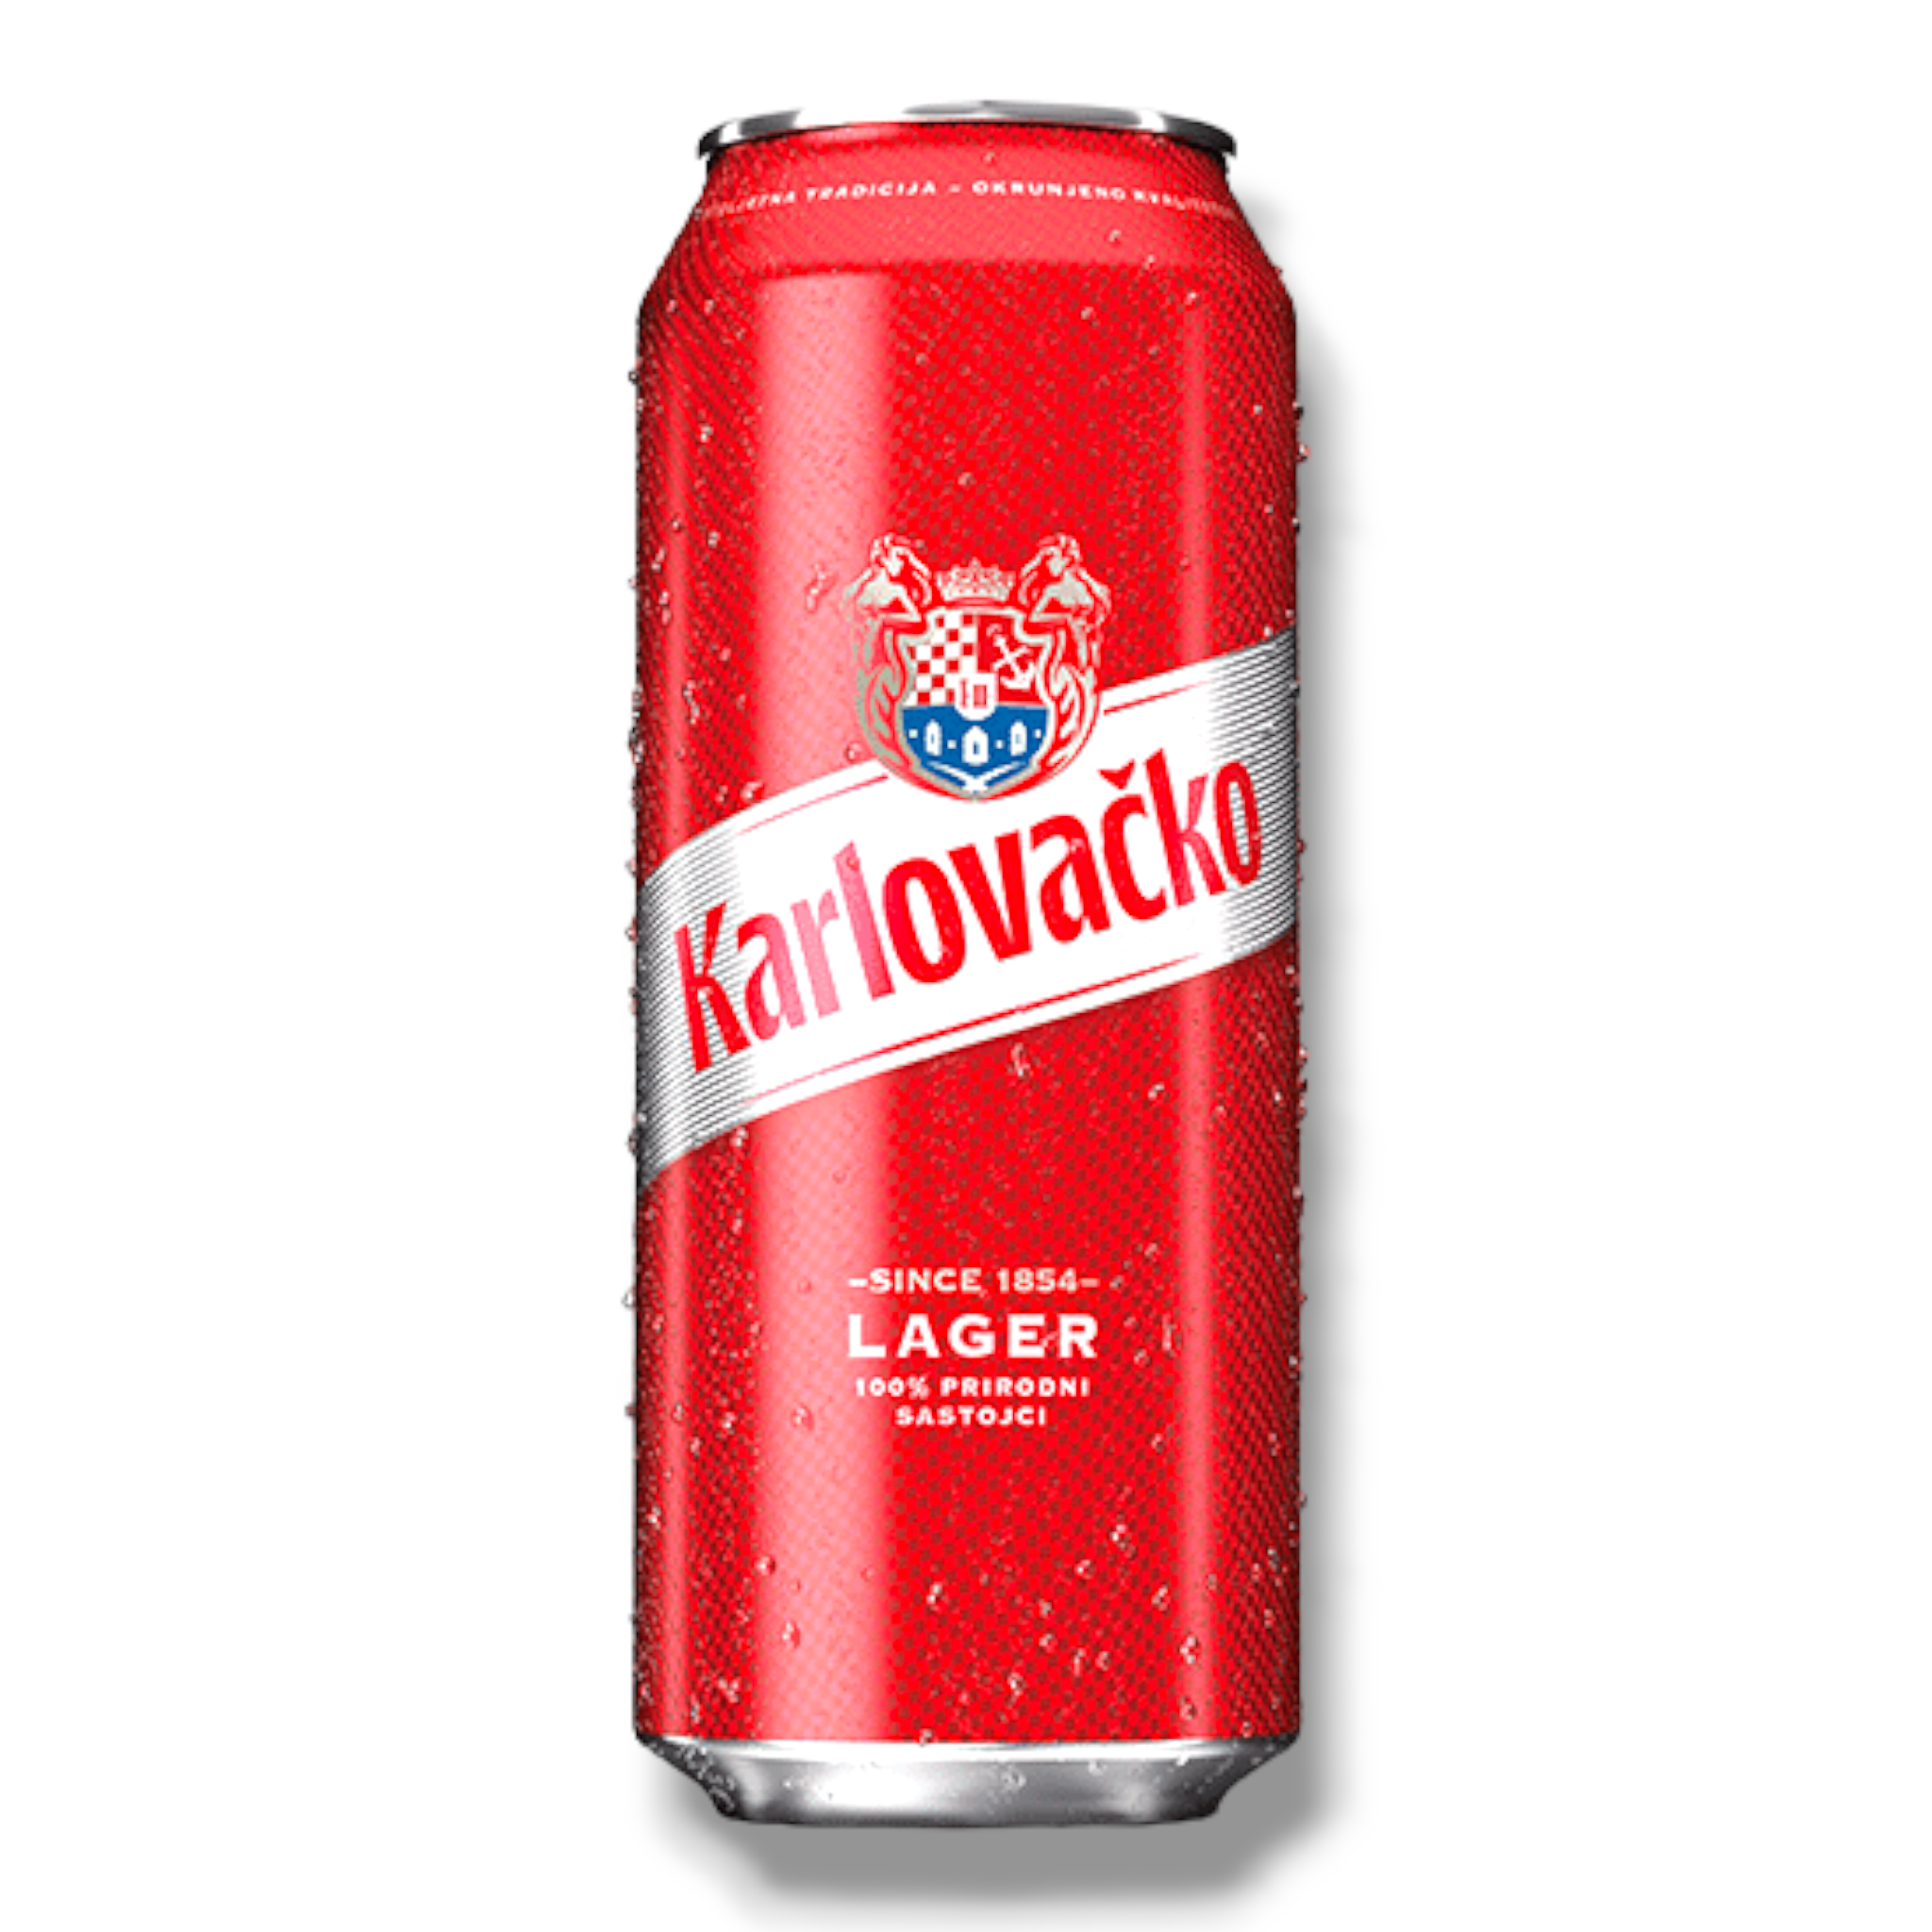 Karlovacko Lager 0,5l Dose - Lagerbier aus Kroatien mit 5,4% Vol.